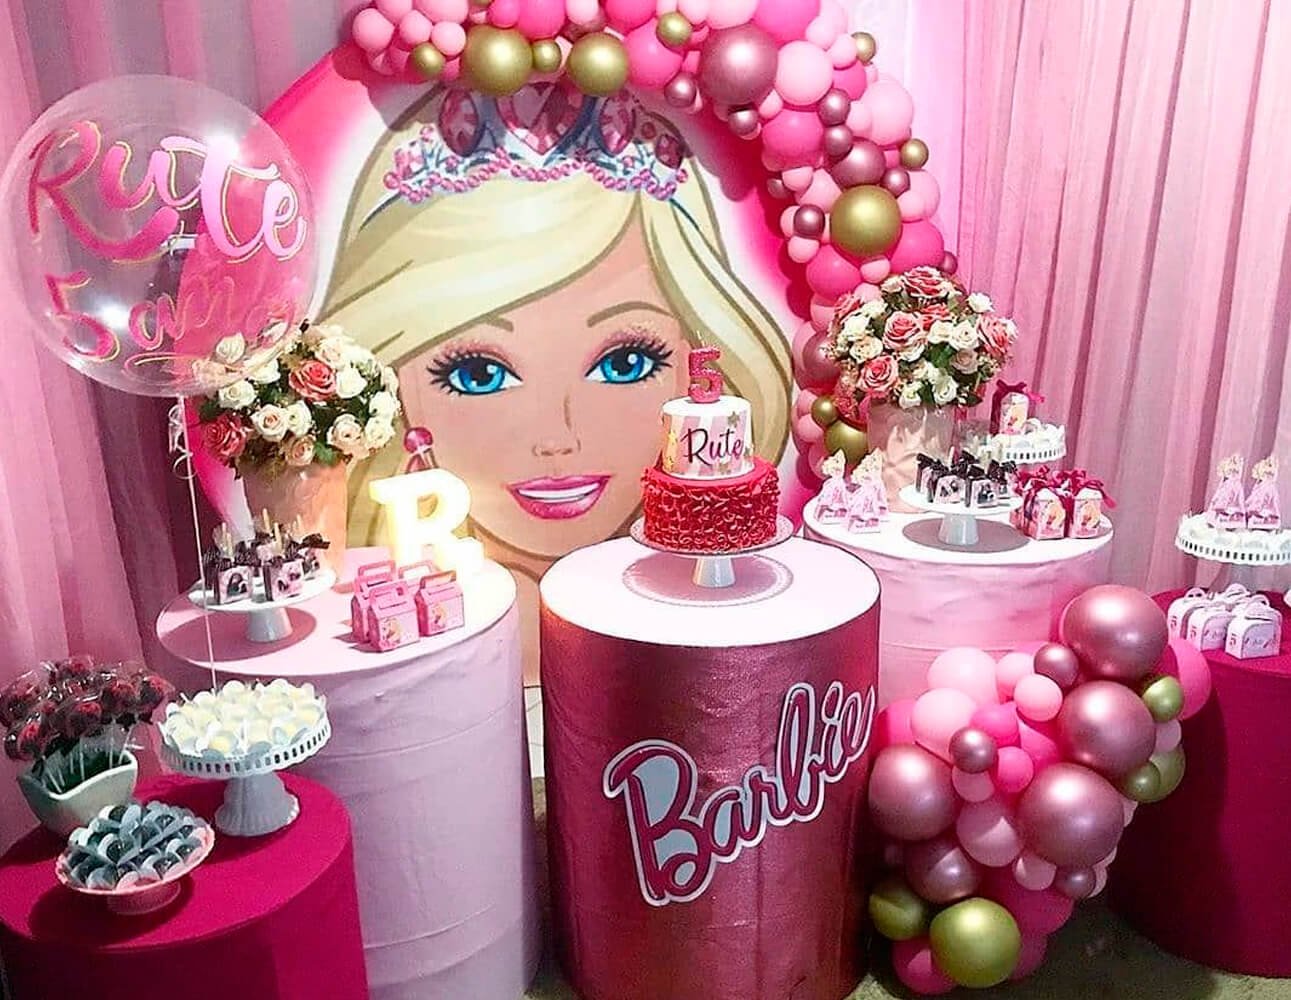 Conjunto da Barbie/ Roupa infantil/ Festa /aniversário/